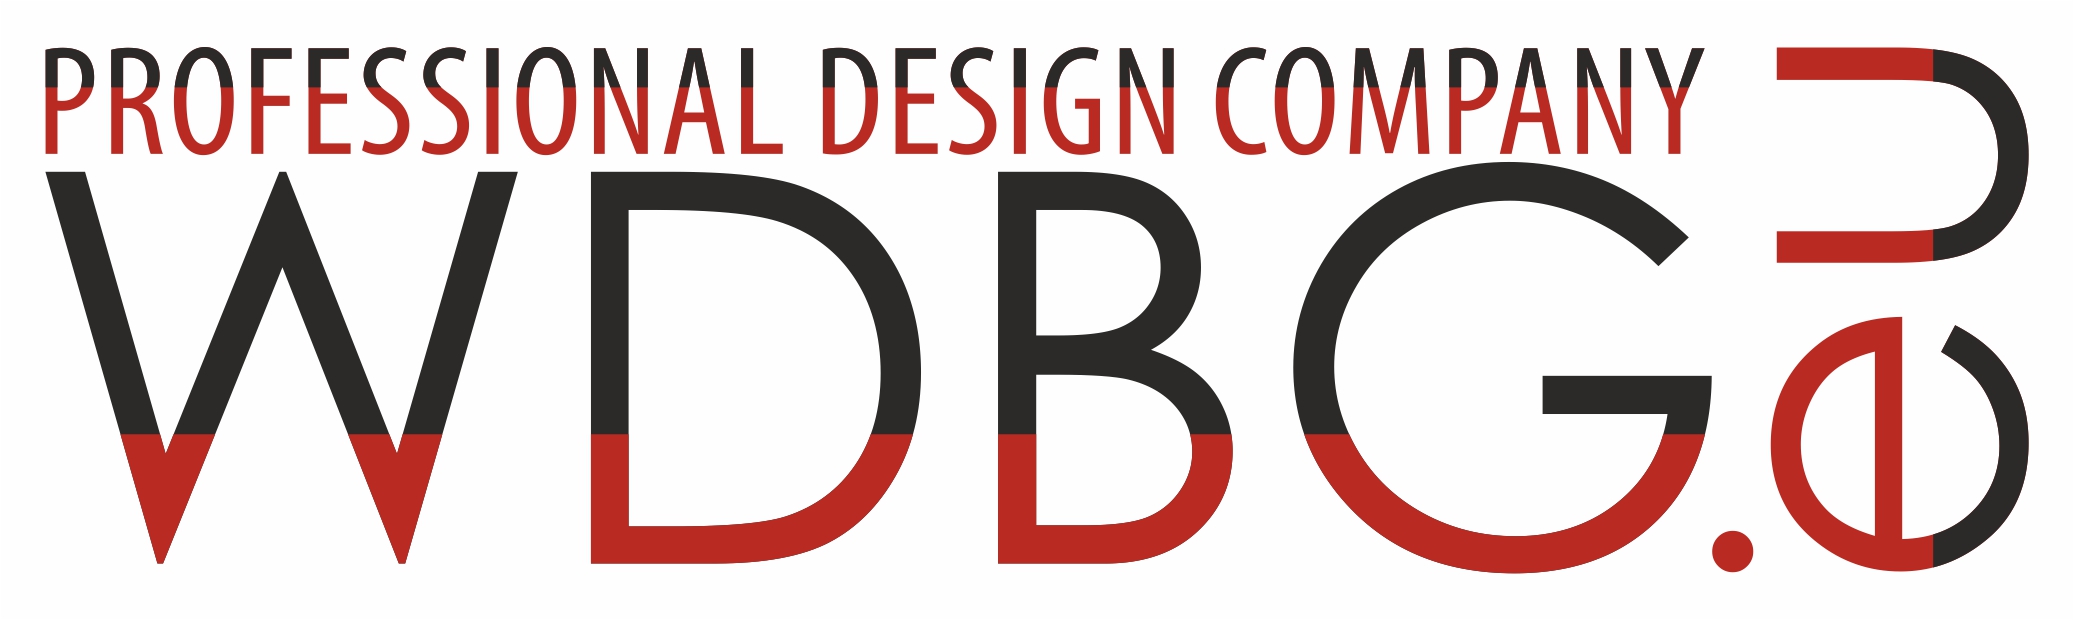 Web Designs Ltd